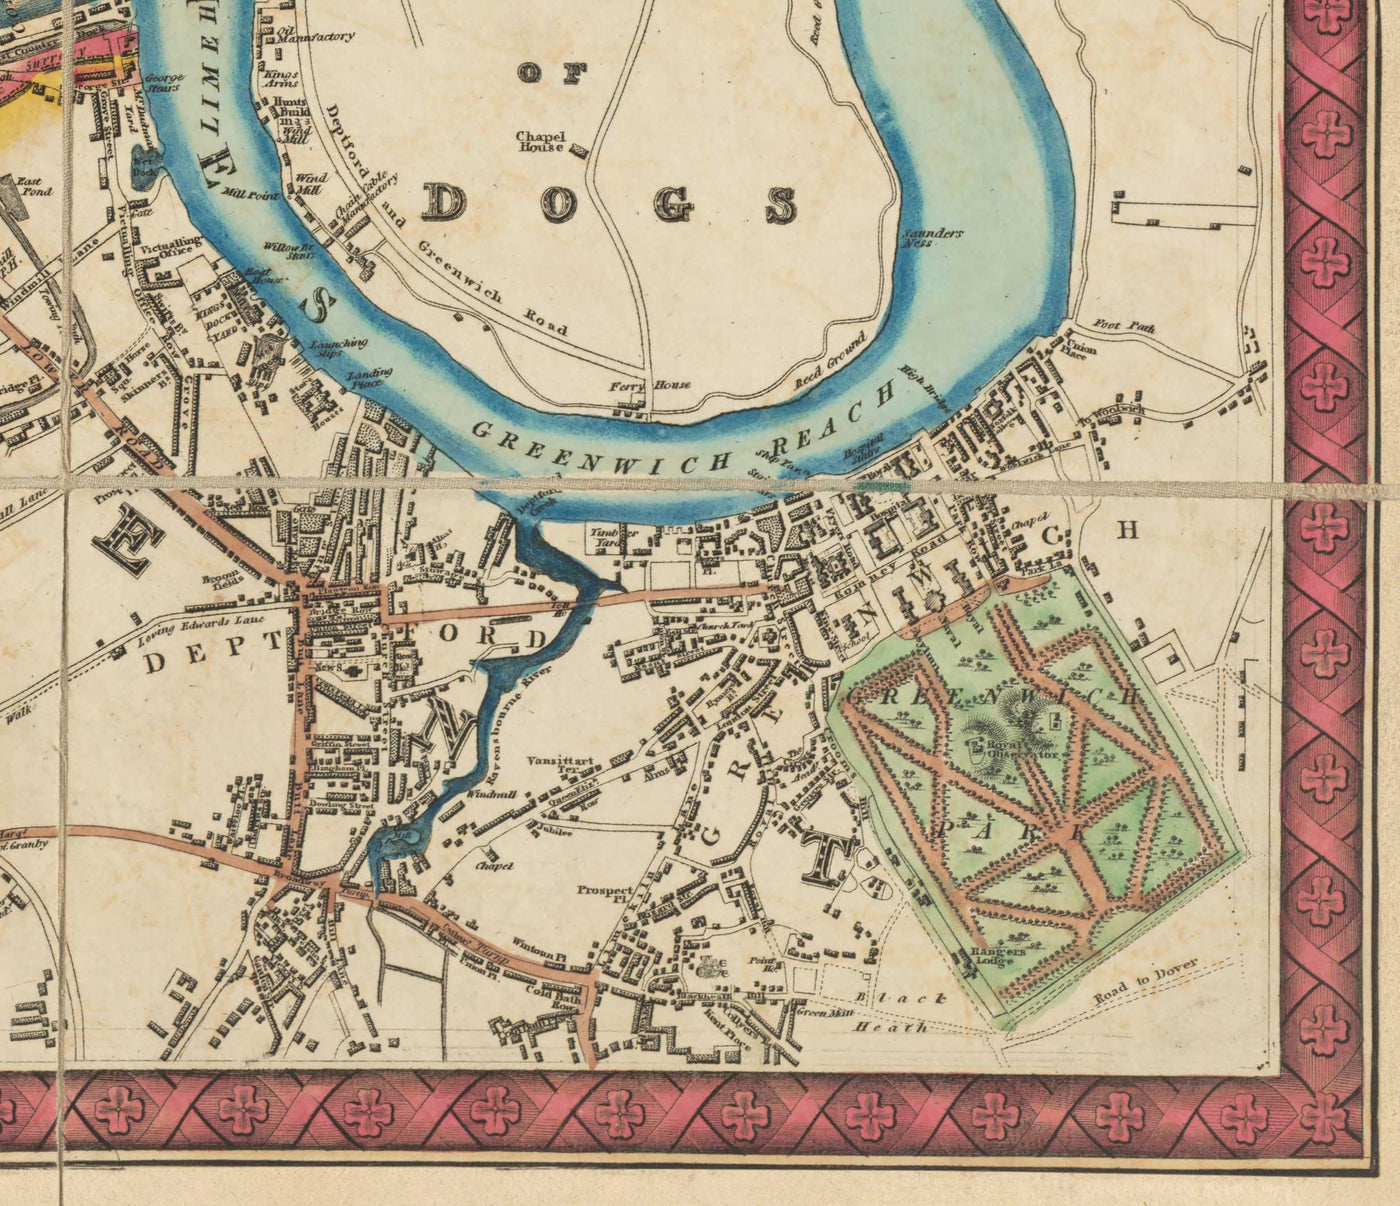 Mapa antiguo de Londres y sus alrededores en 1822 por Thompson - Isle of Dogs, Bermondsey, Deptford, Covent Garden, Westminster